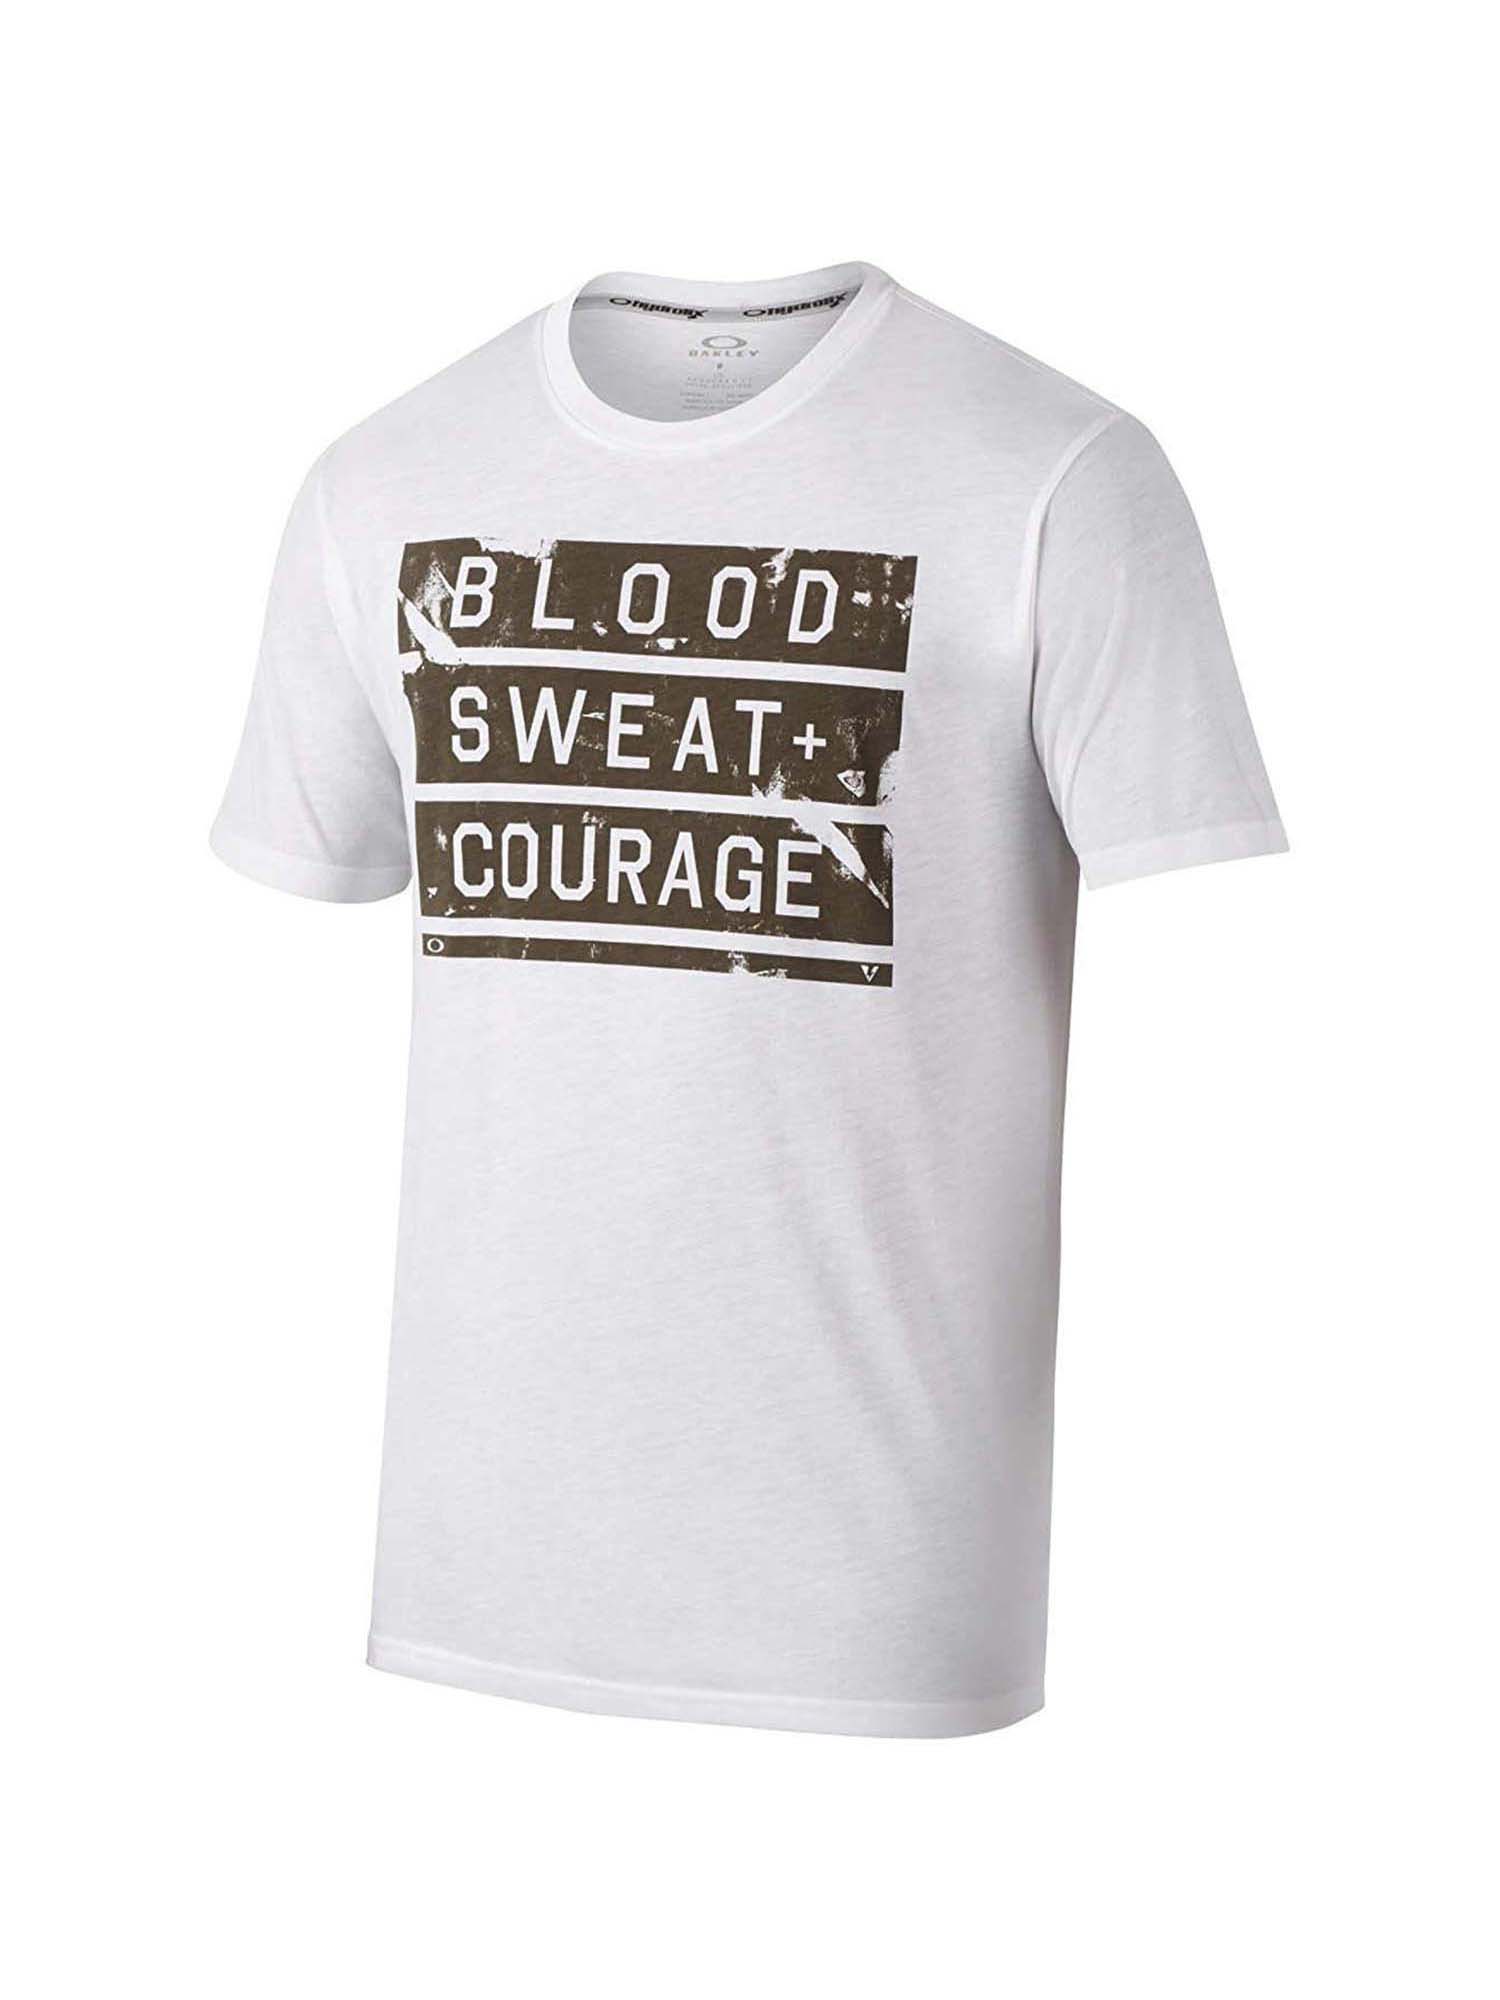 Oakley O-Courage Men's T-Shirt - White - image 1 of 1